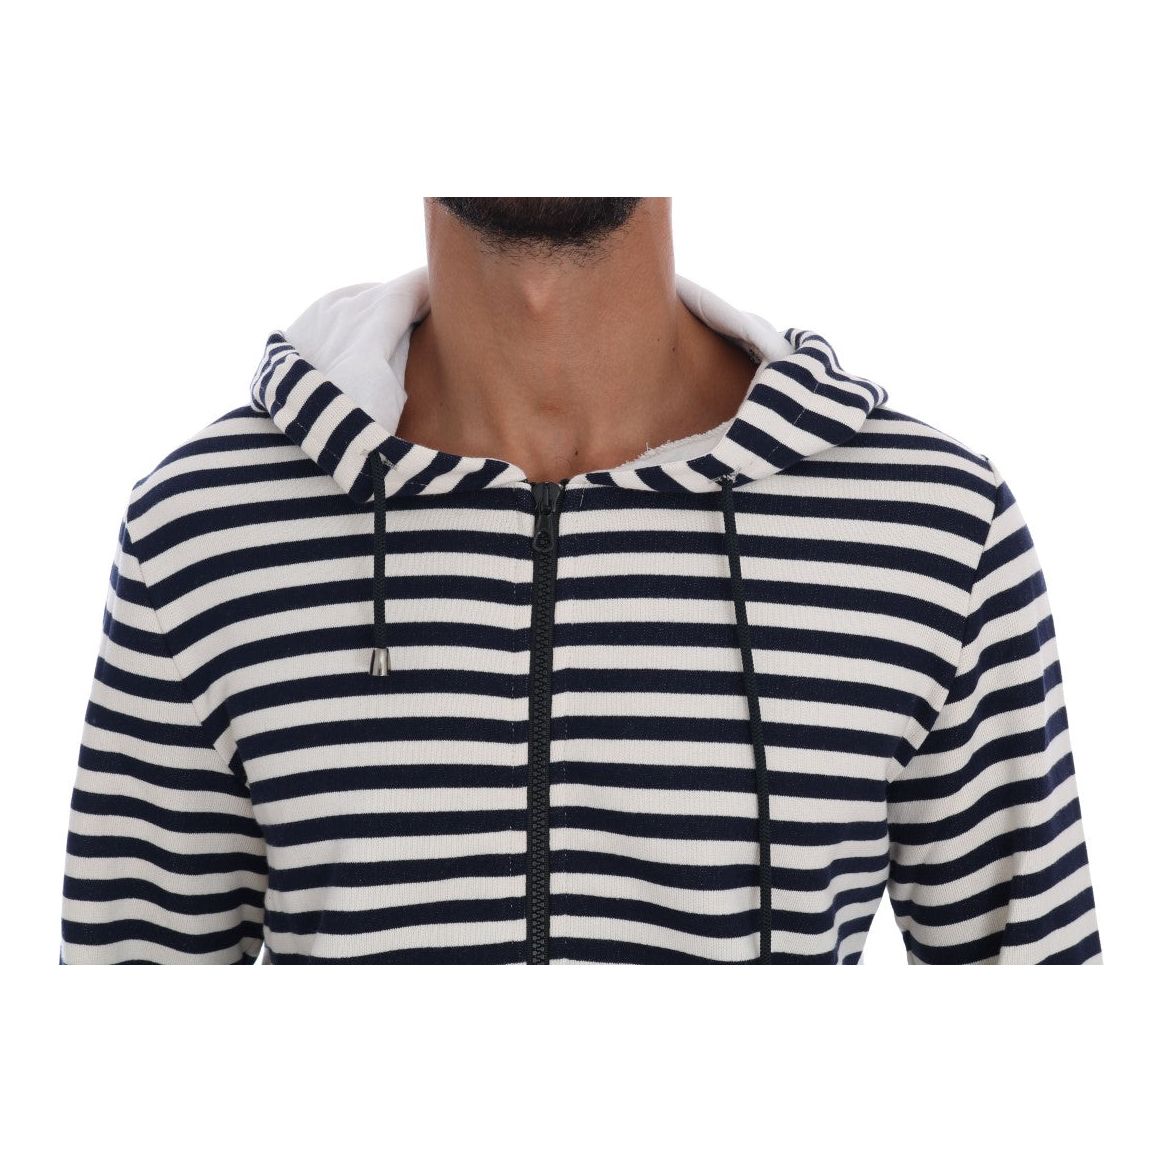 Daniele Alessandrini Elegant Full Zip Hooded Striped Sweater blue-white-striped-hooded-cotton-sweater 457232-blue-white-striped-hooded-cotton-sweater-3.jpg